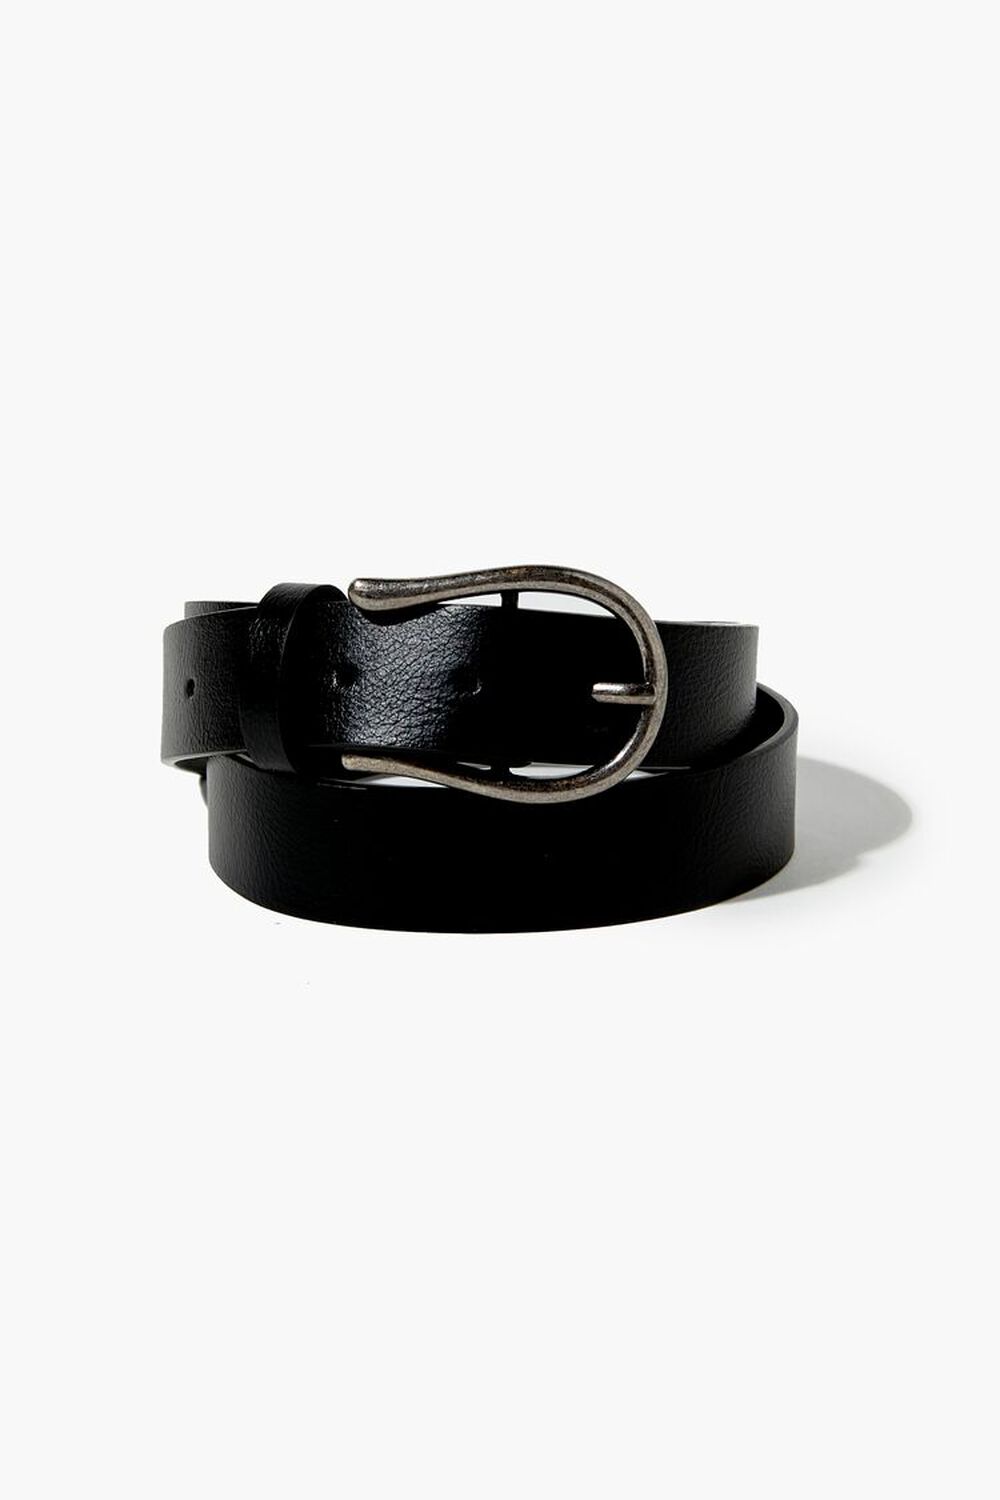 BLACK/SILVER Faux Leather Hip Belt, image 3